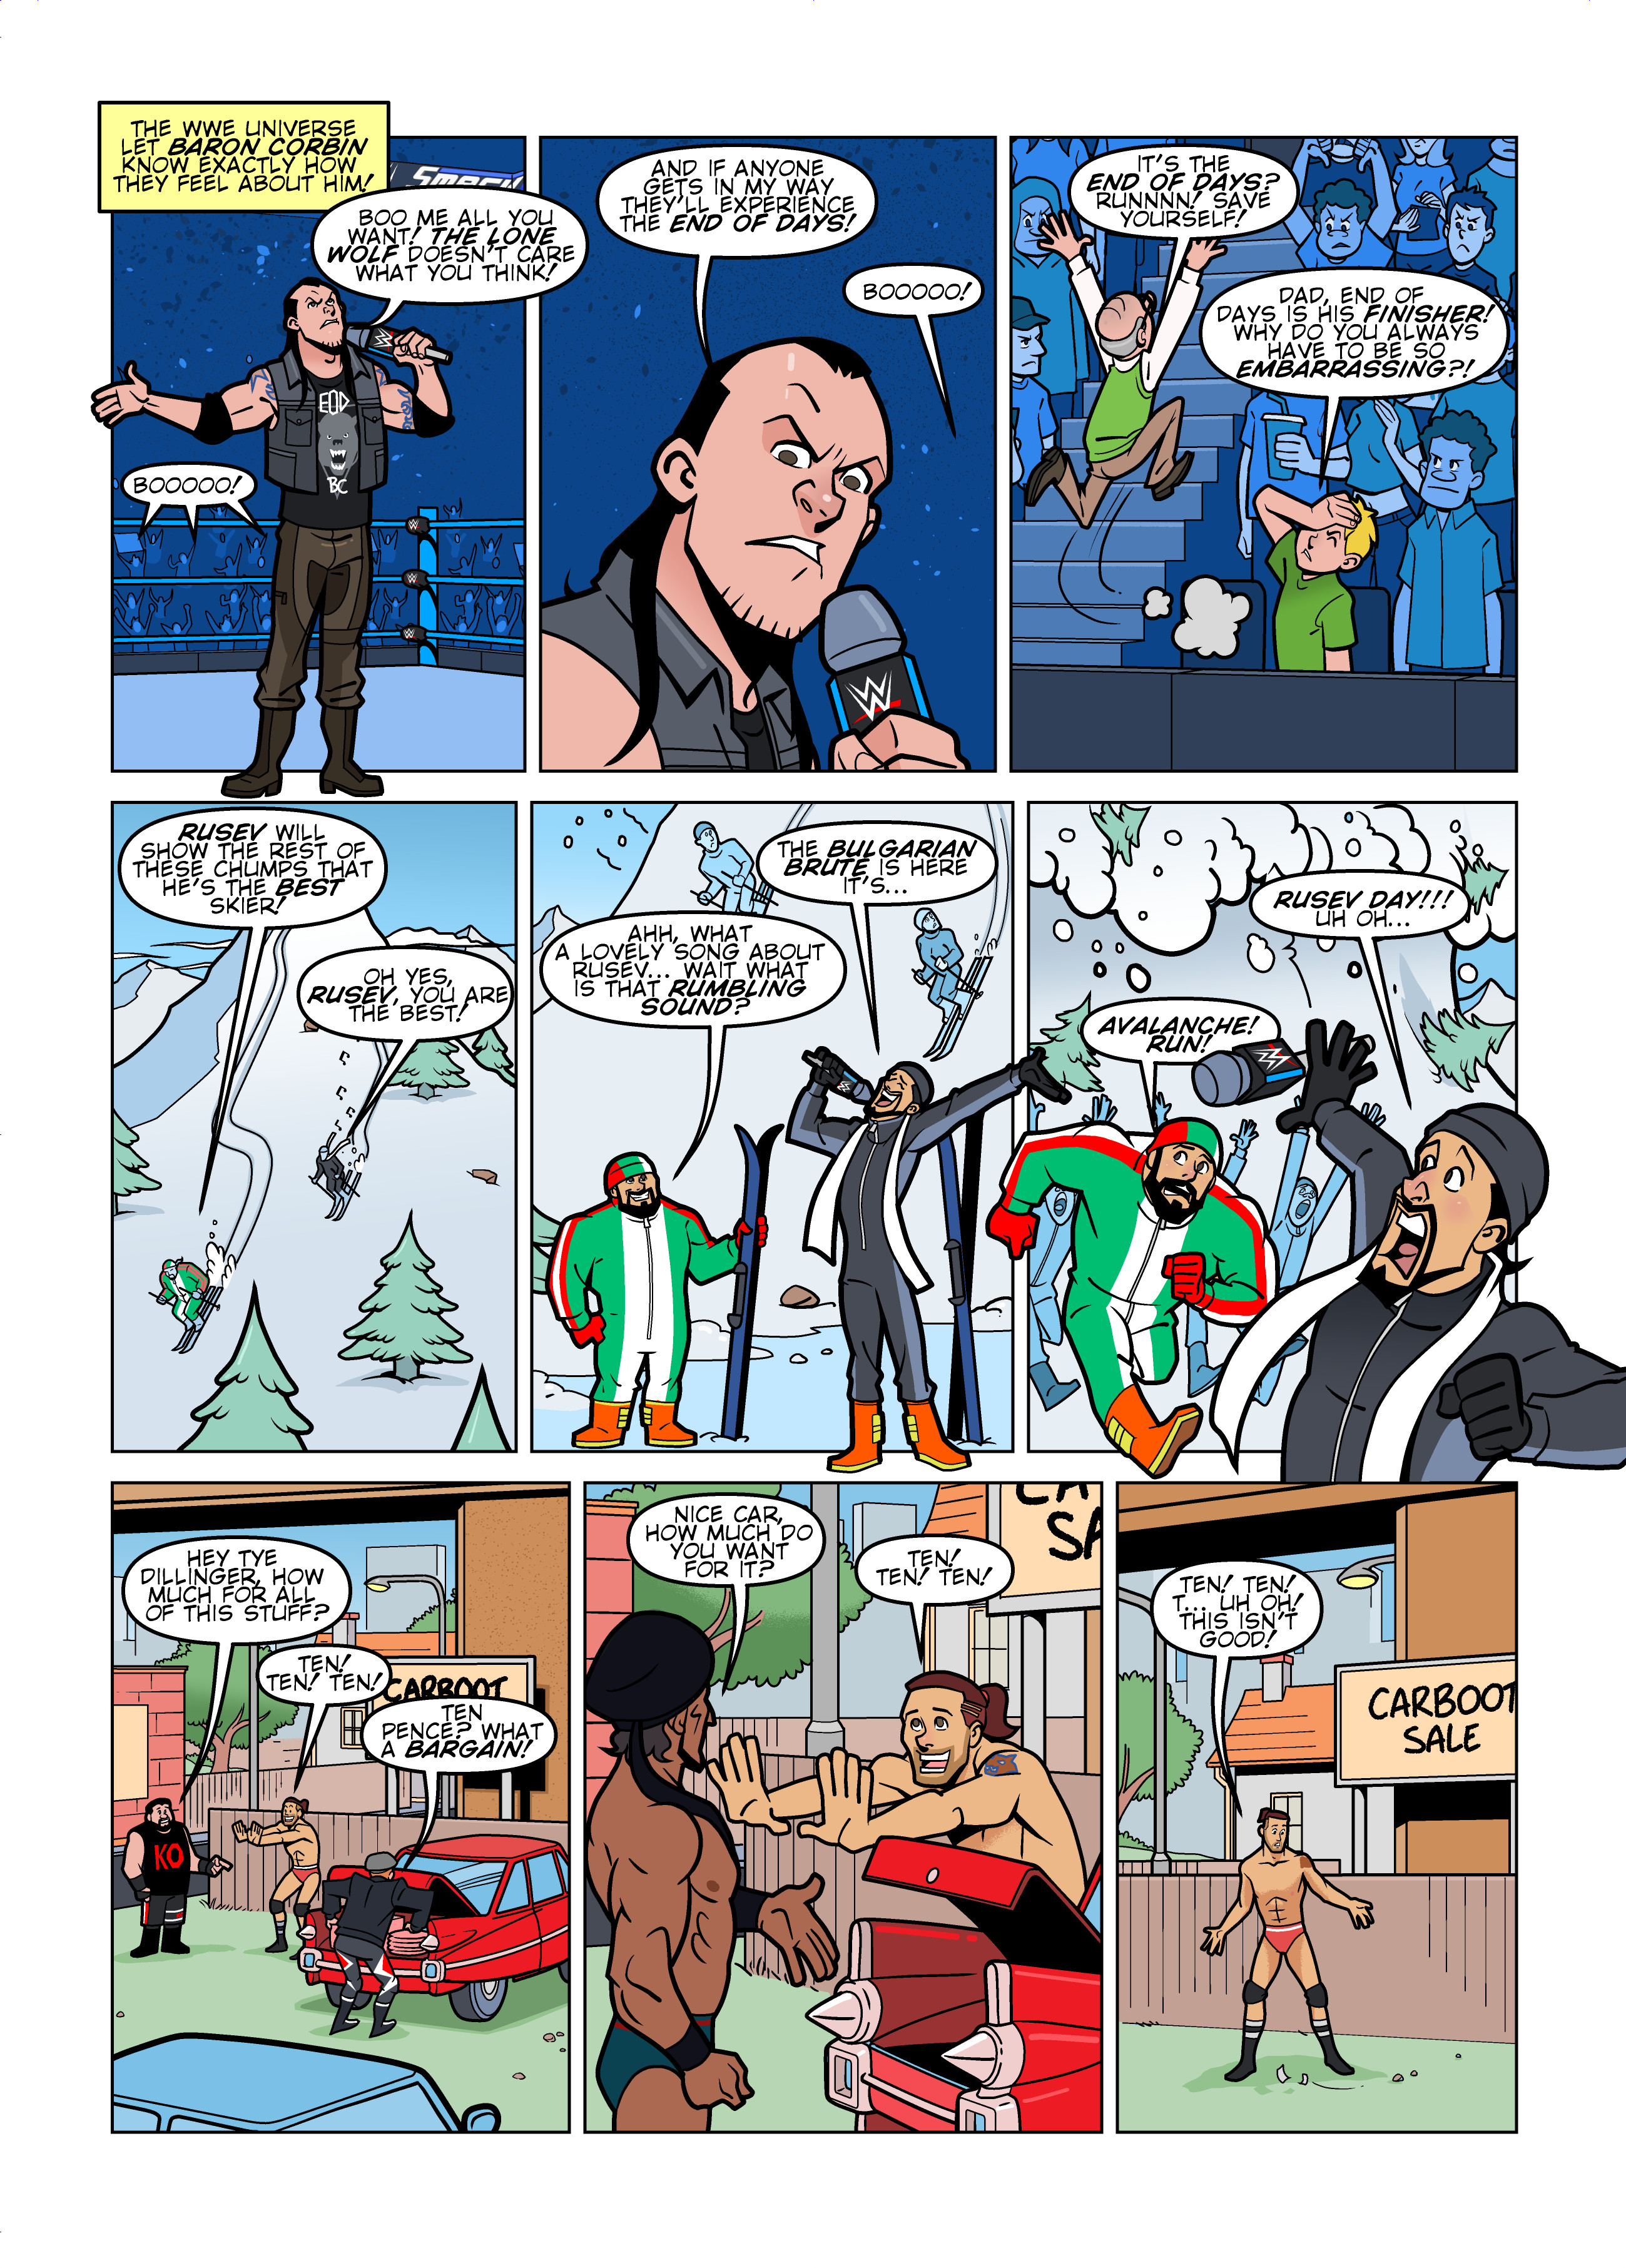 WWE Smackdown Live comic strips for WWE Kids Magazine #135